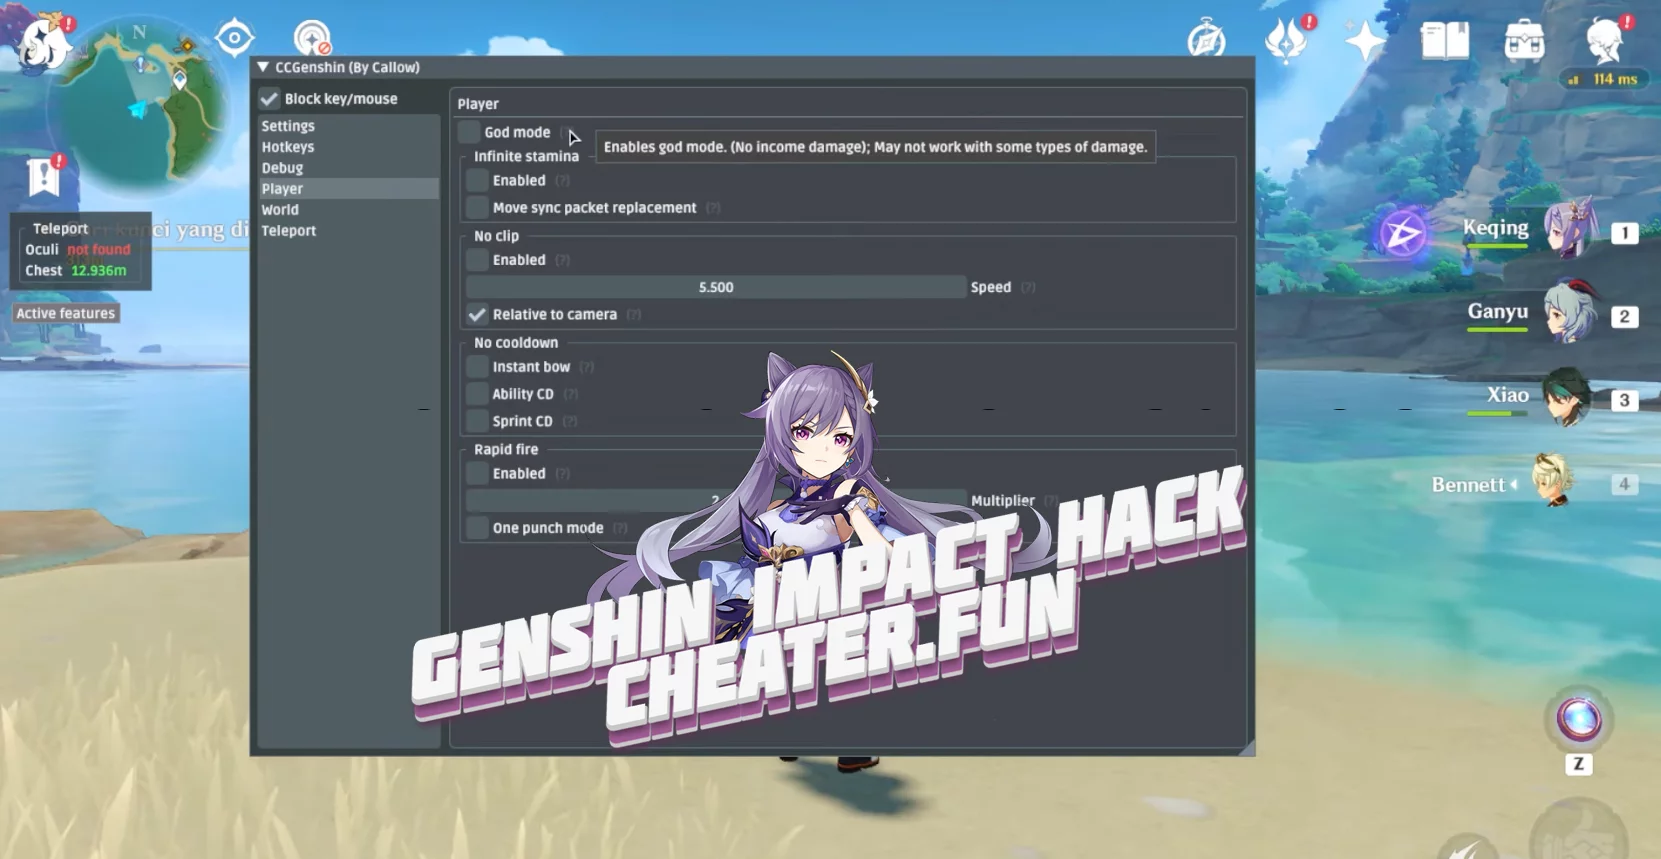 The Best Hack Genshin Impact 2022